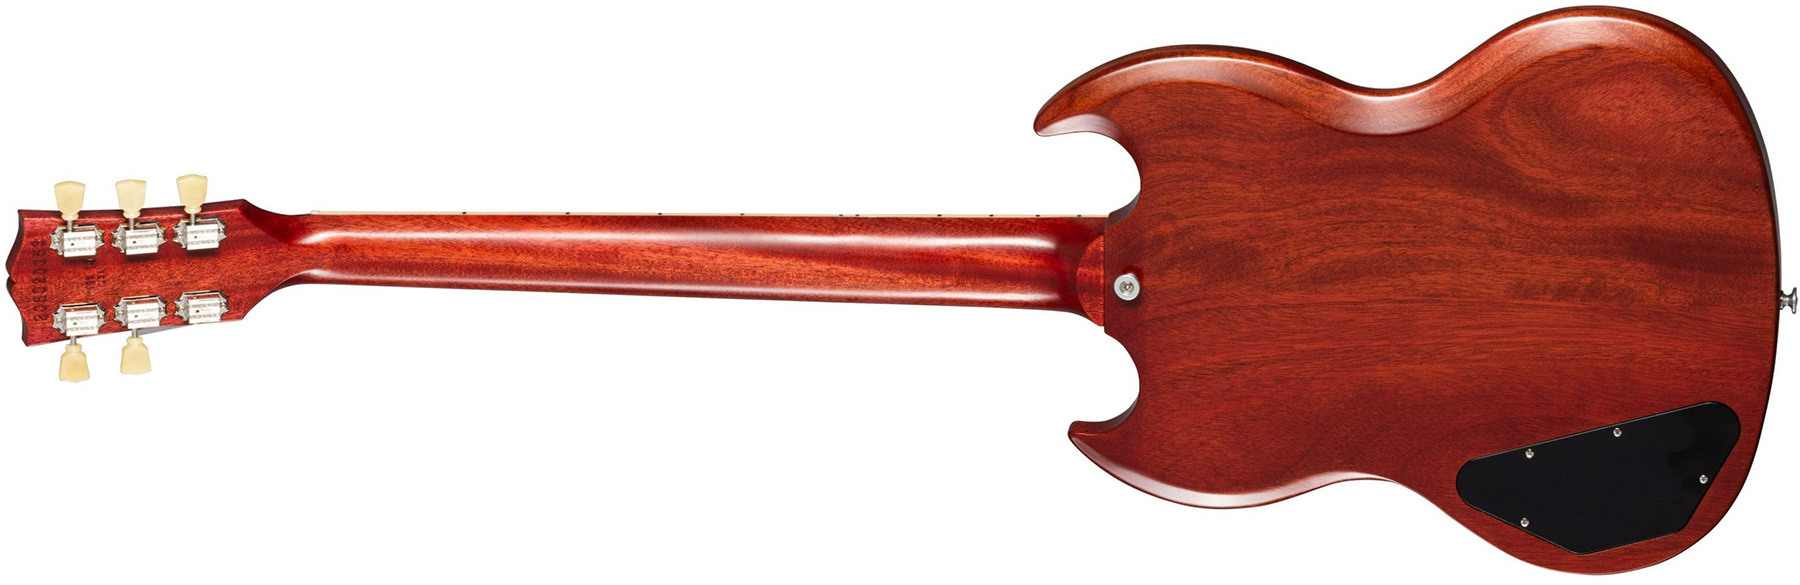 Gibson Sg Standard 1961 Faded Maestro Vibrola Original 2h Trem Rw - Vintage Cherry - Double cut electric guitar - Variation 1